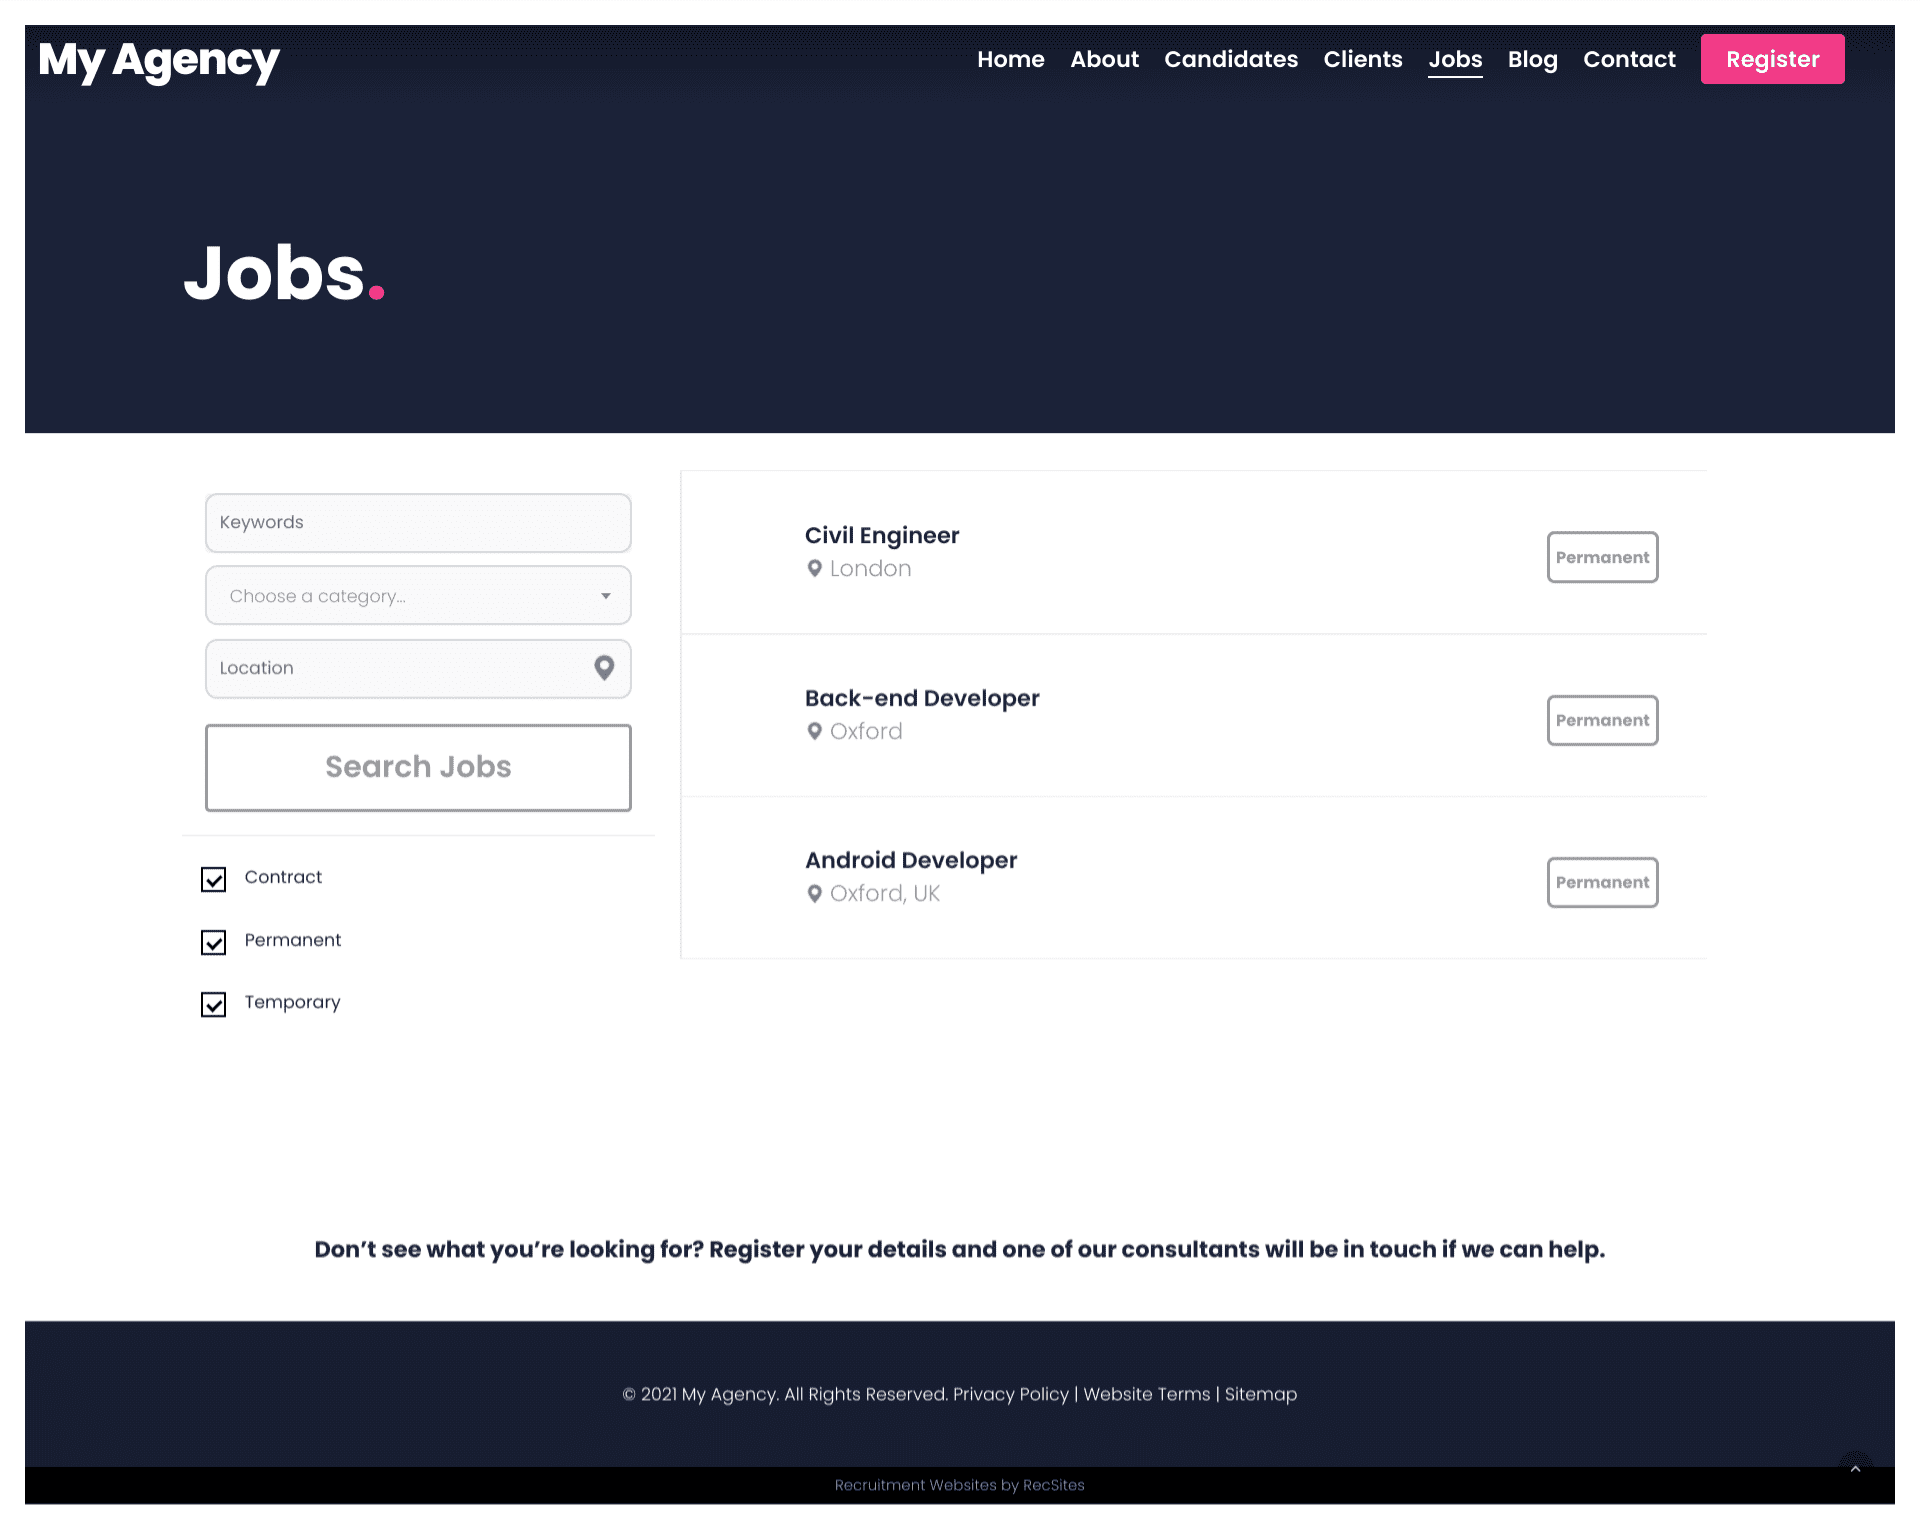 Recruitment website design job list page.